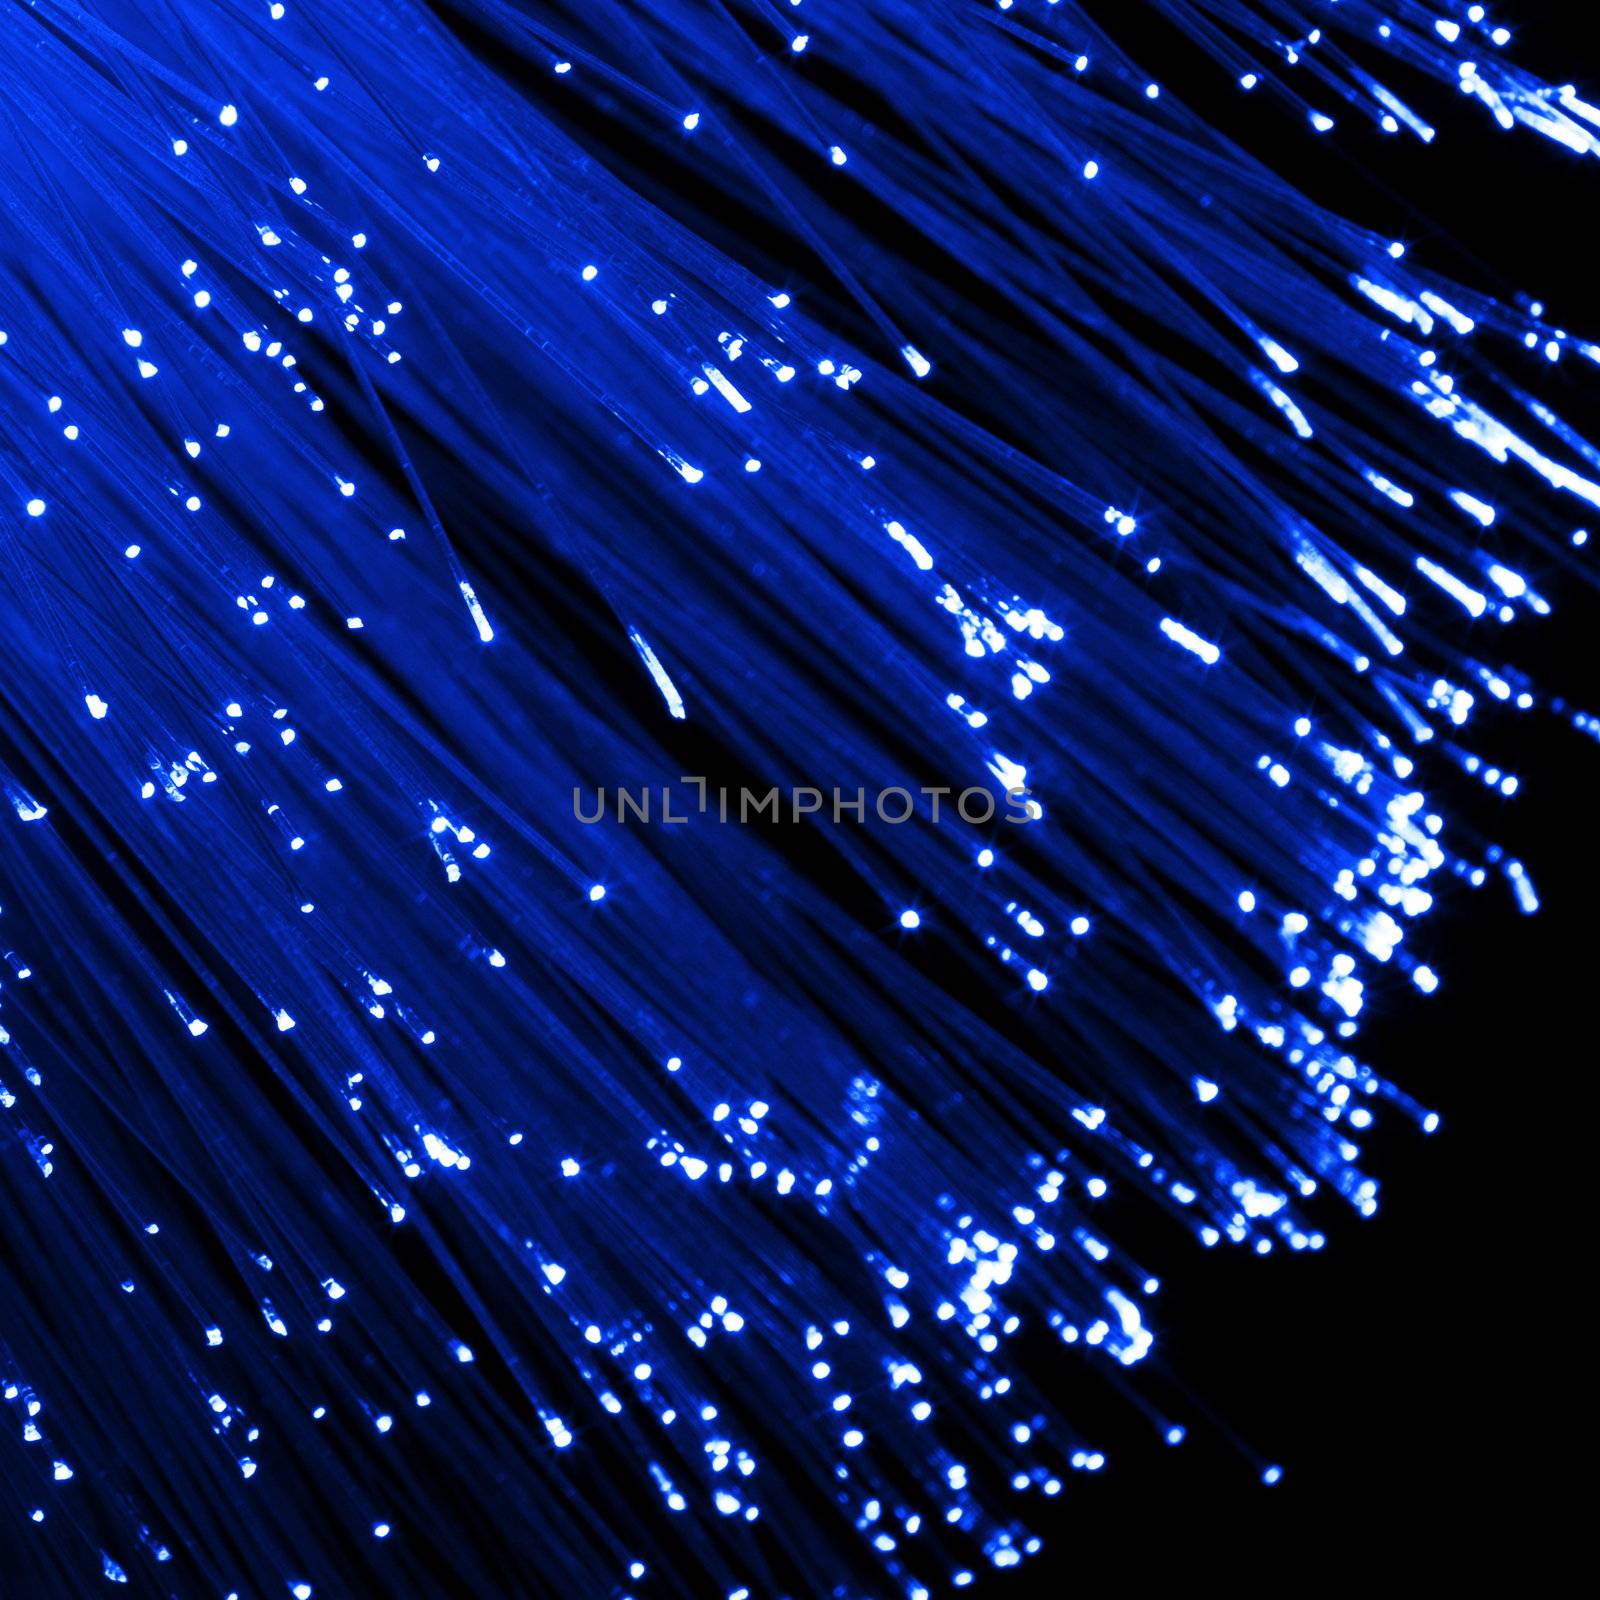 fiber optic showing data or internet communication concept